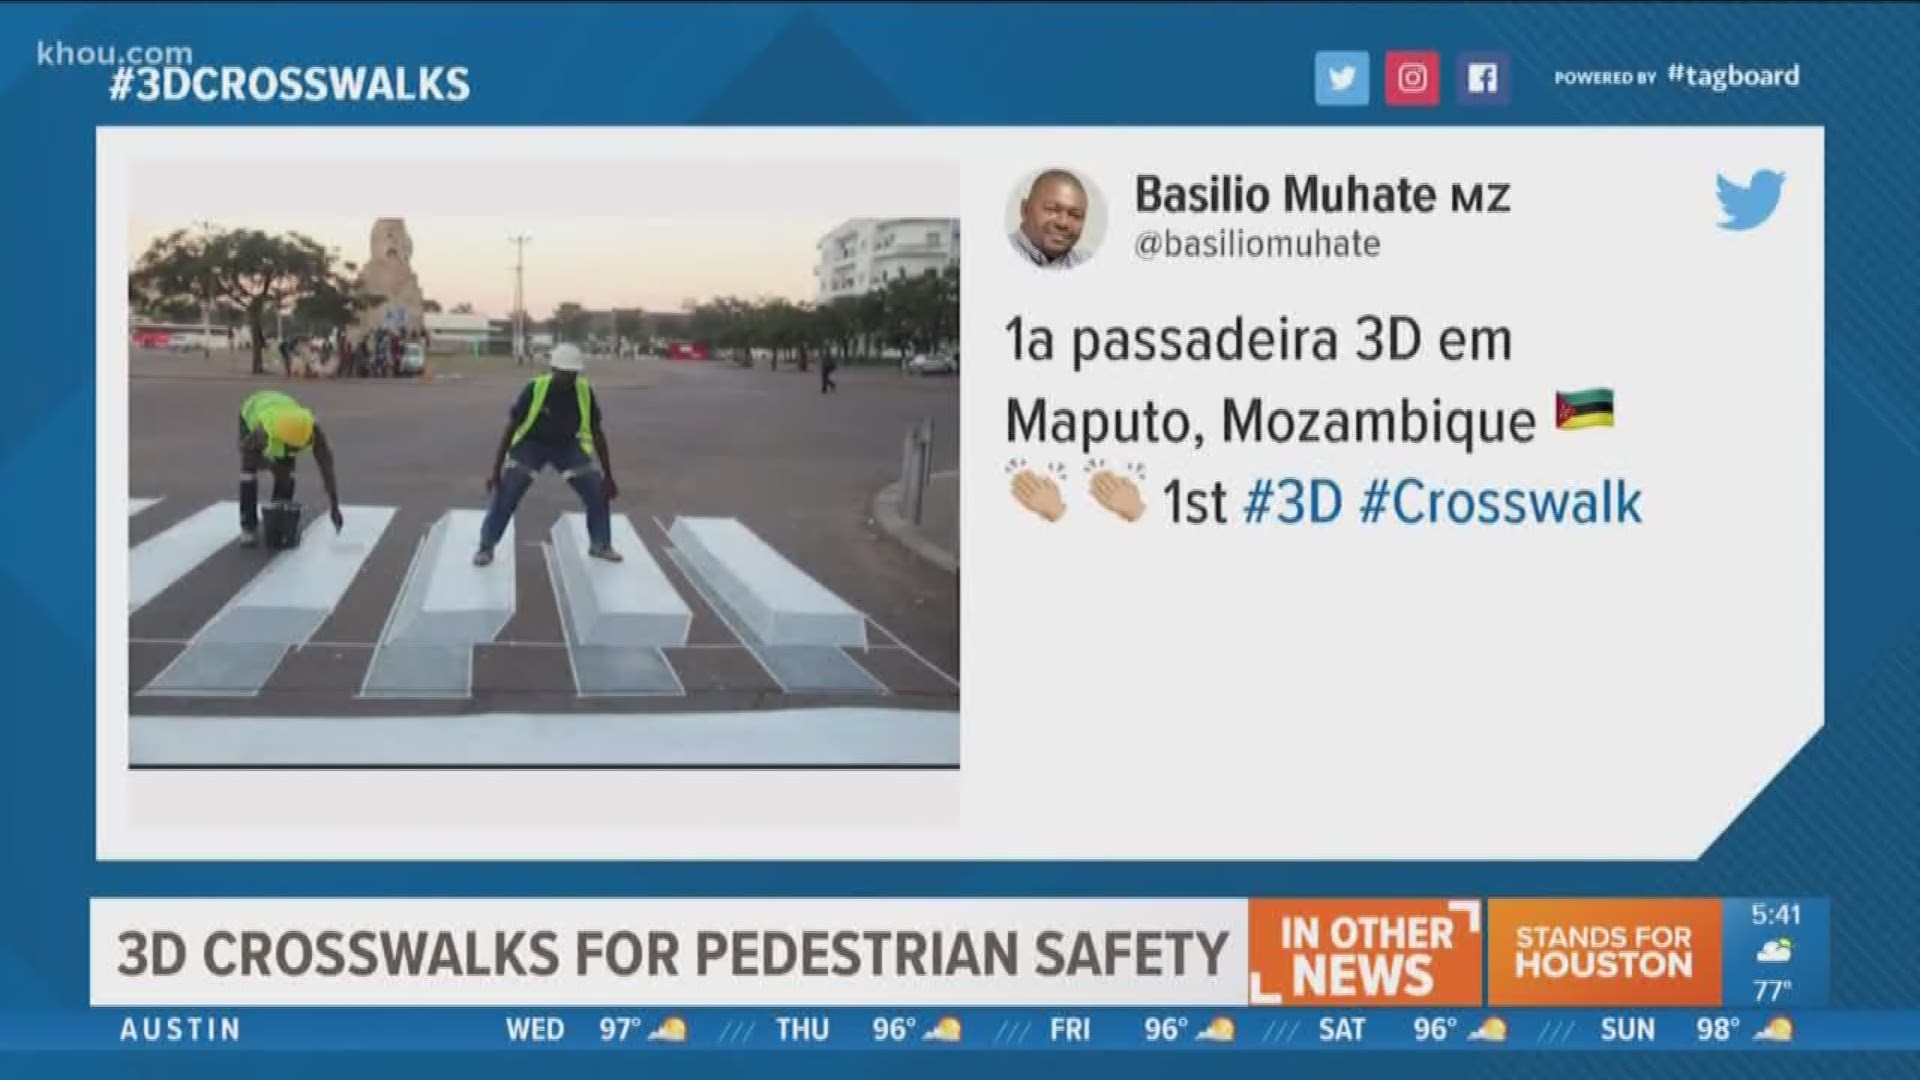 3D crosswalks aim to slow down drivers